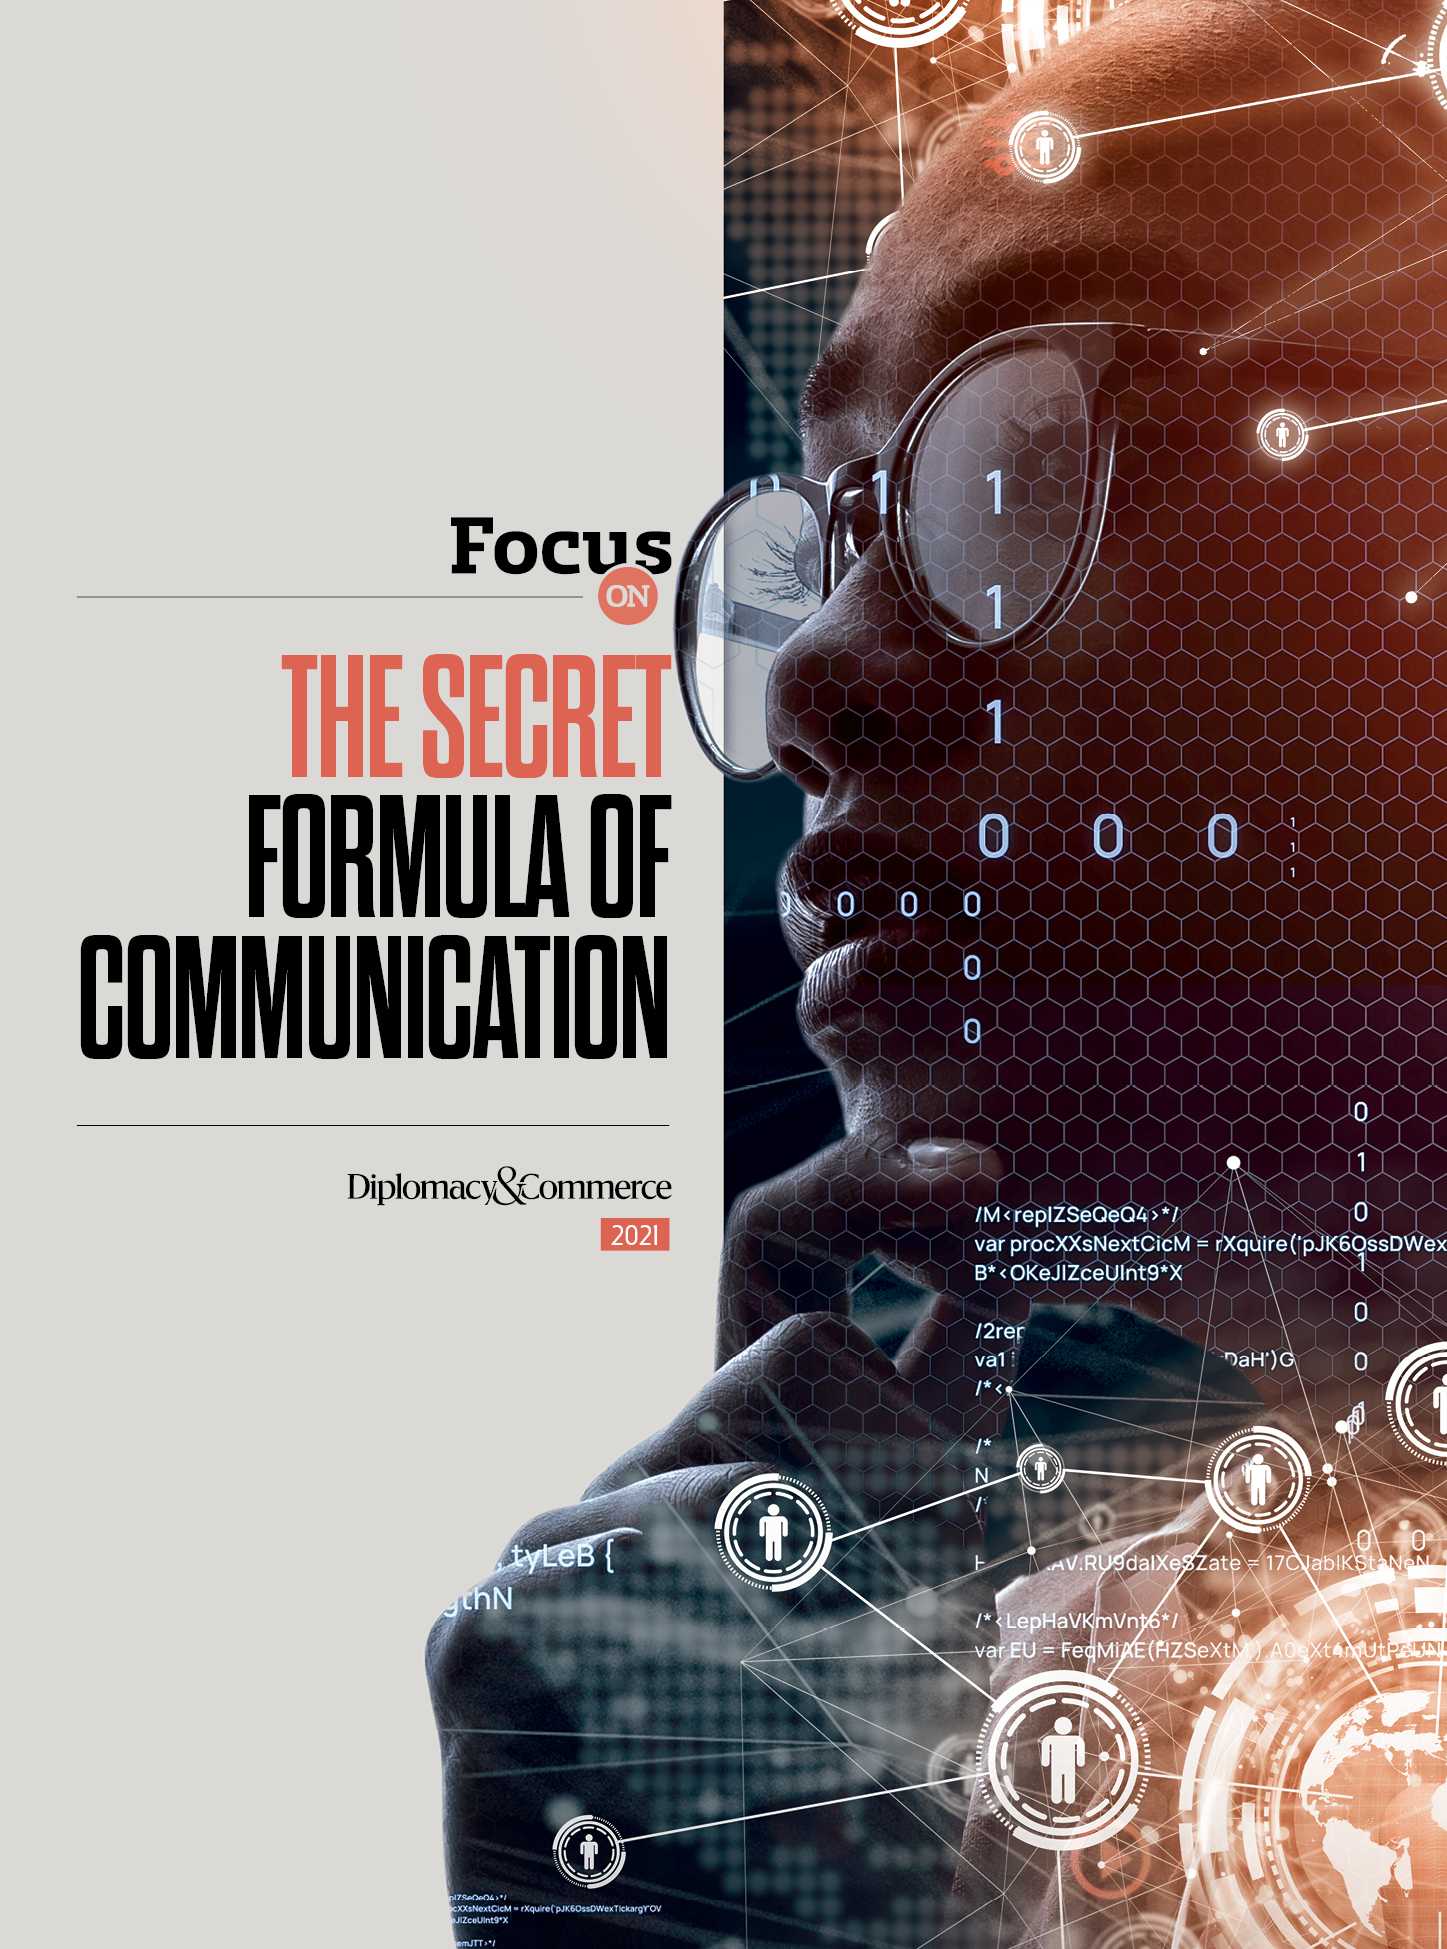 DandC - Diplomacy&Commerce - Focus On - The Secret Formula of Communication 2021